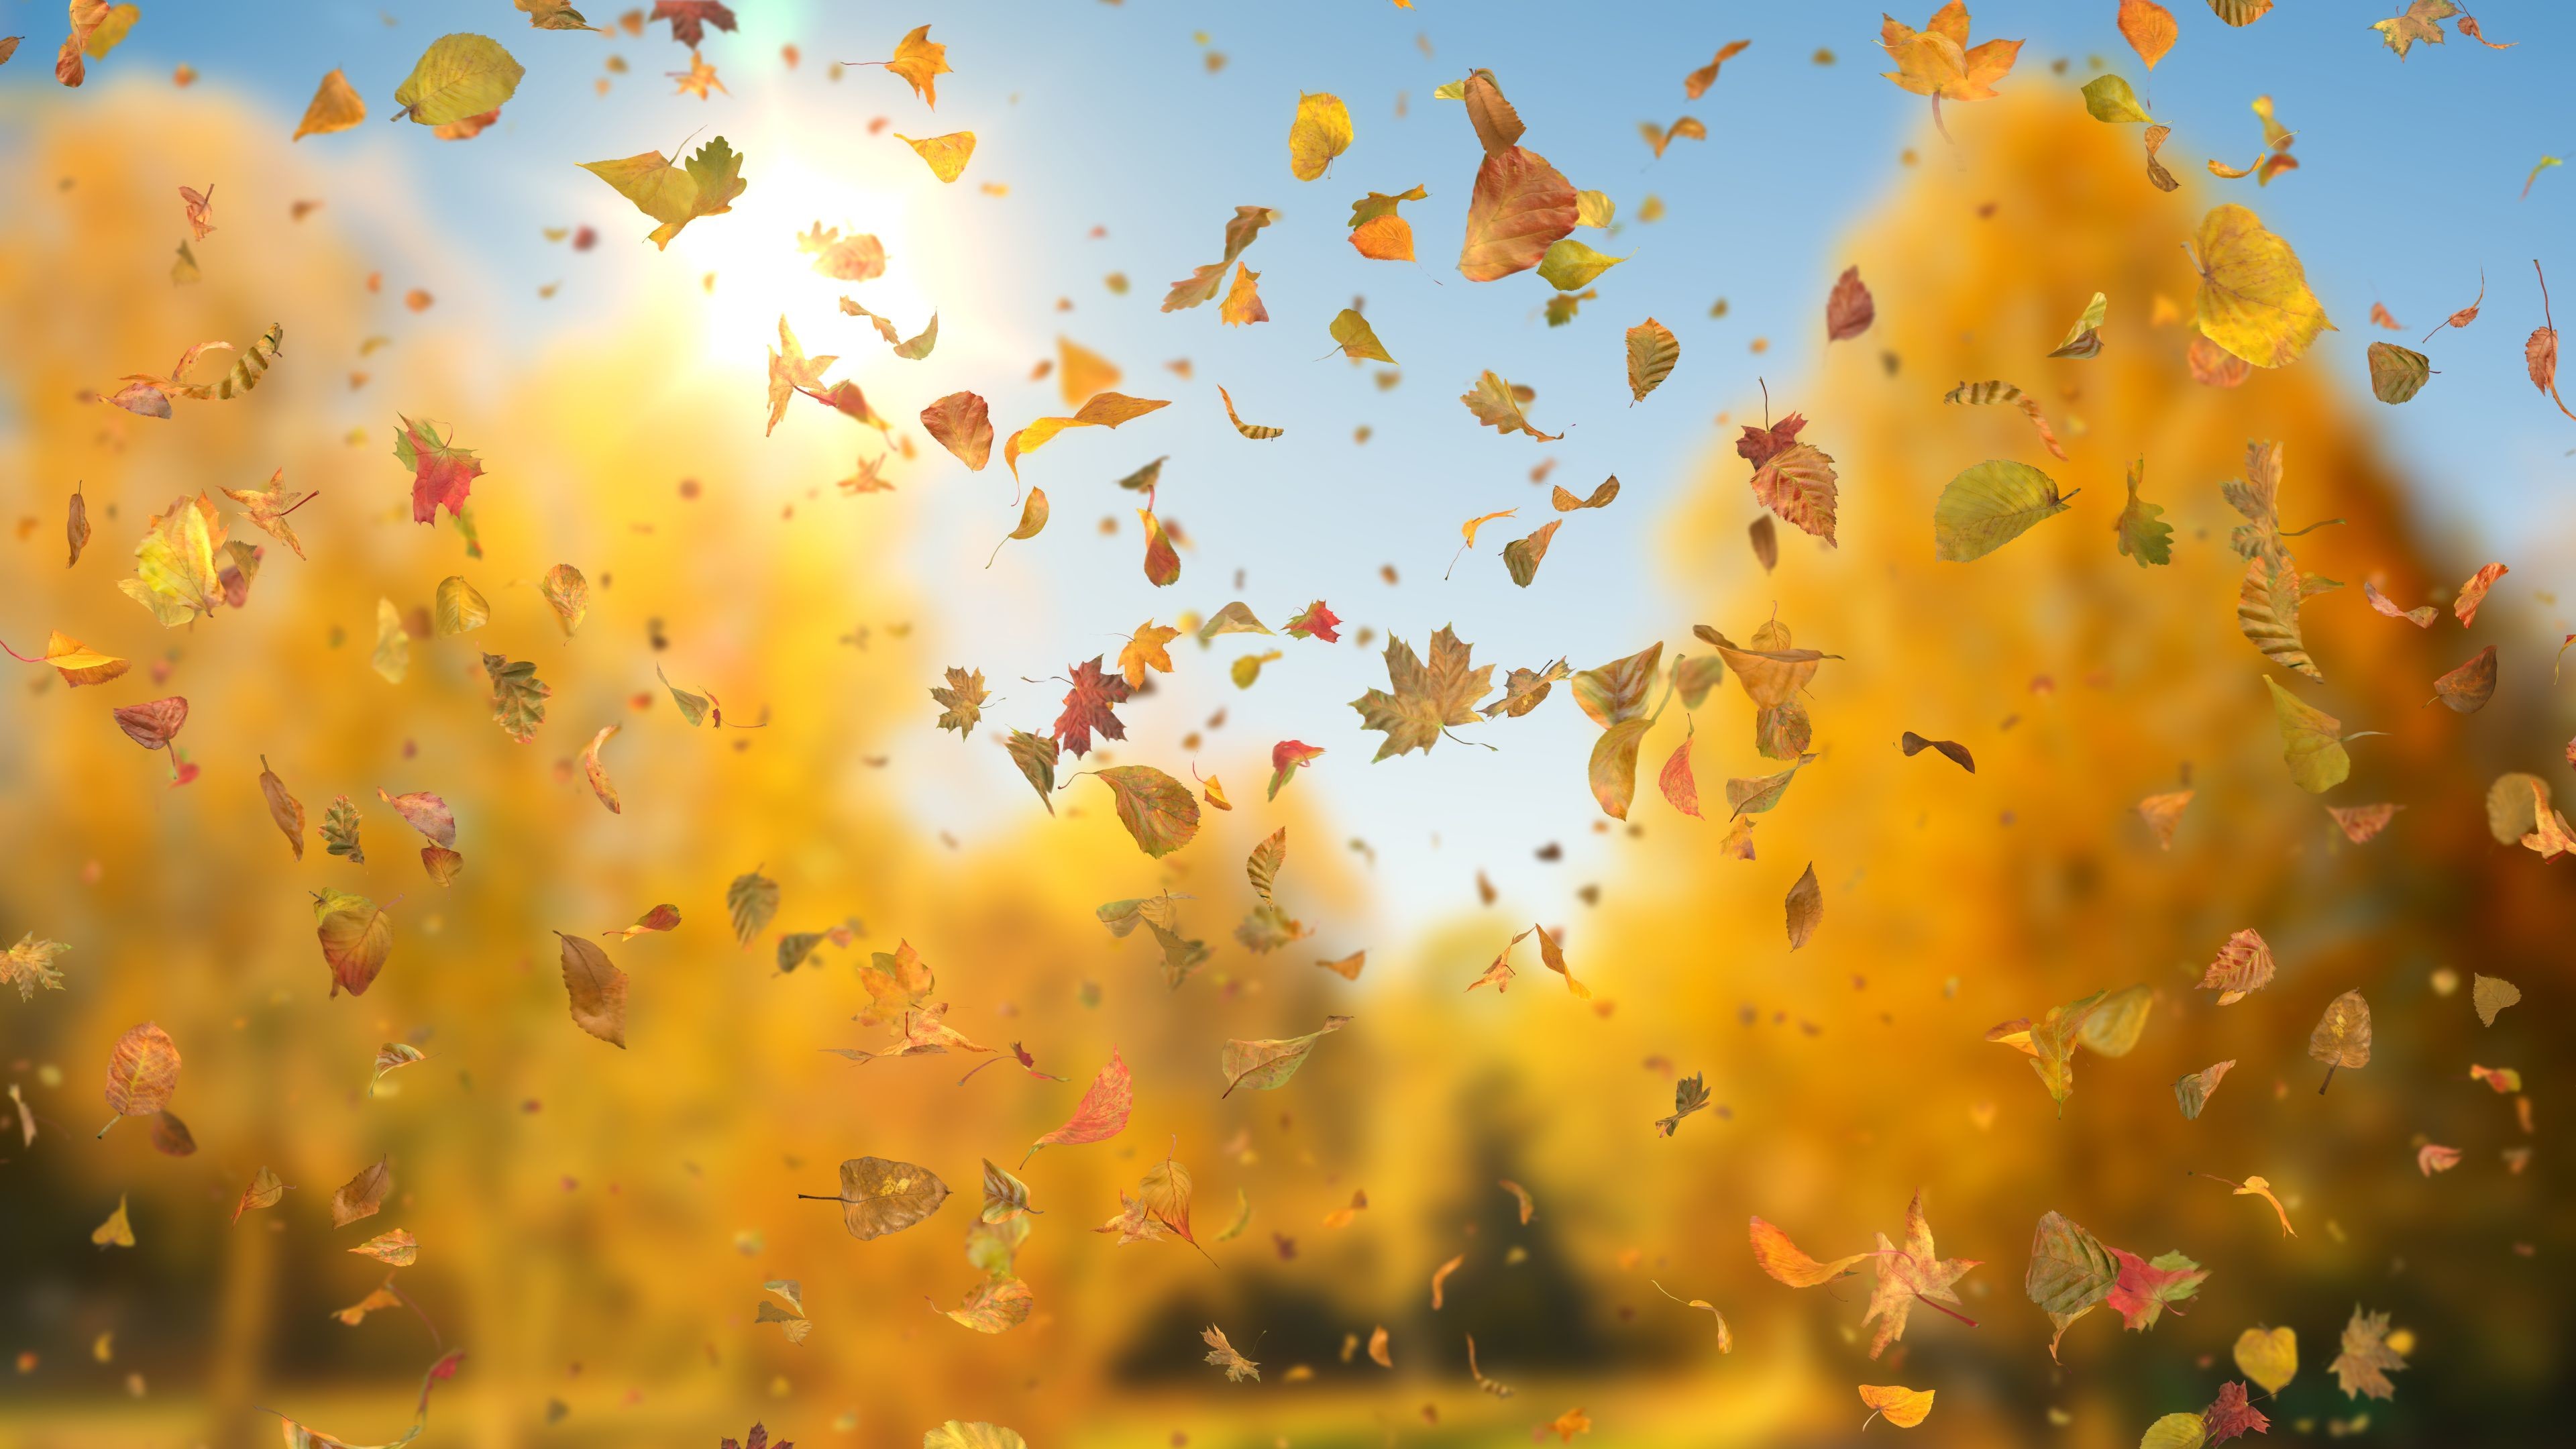 3840x2160 'Autumn Fall Leaves Sideways' - Realistic Falling Leaves Motion Background  Loop-Sample2